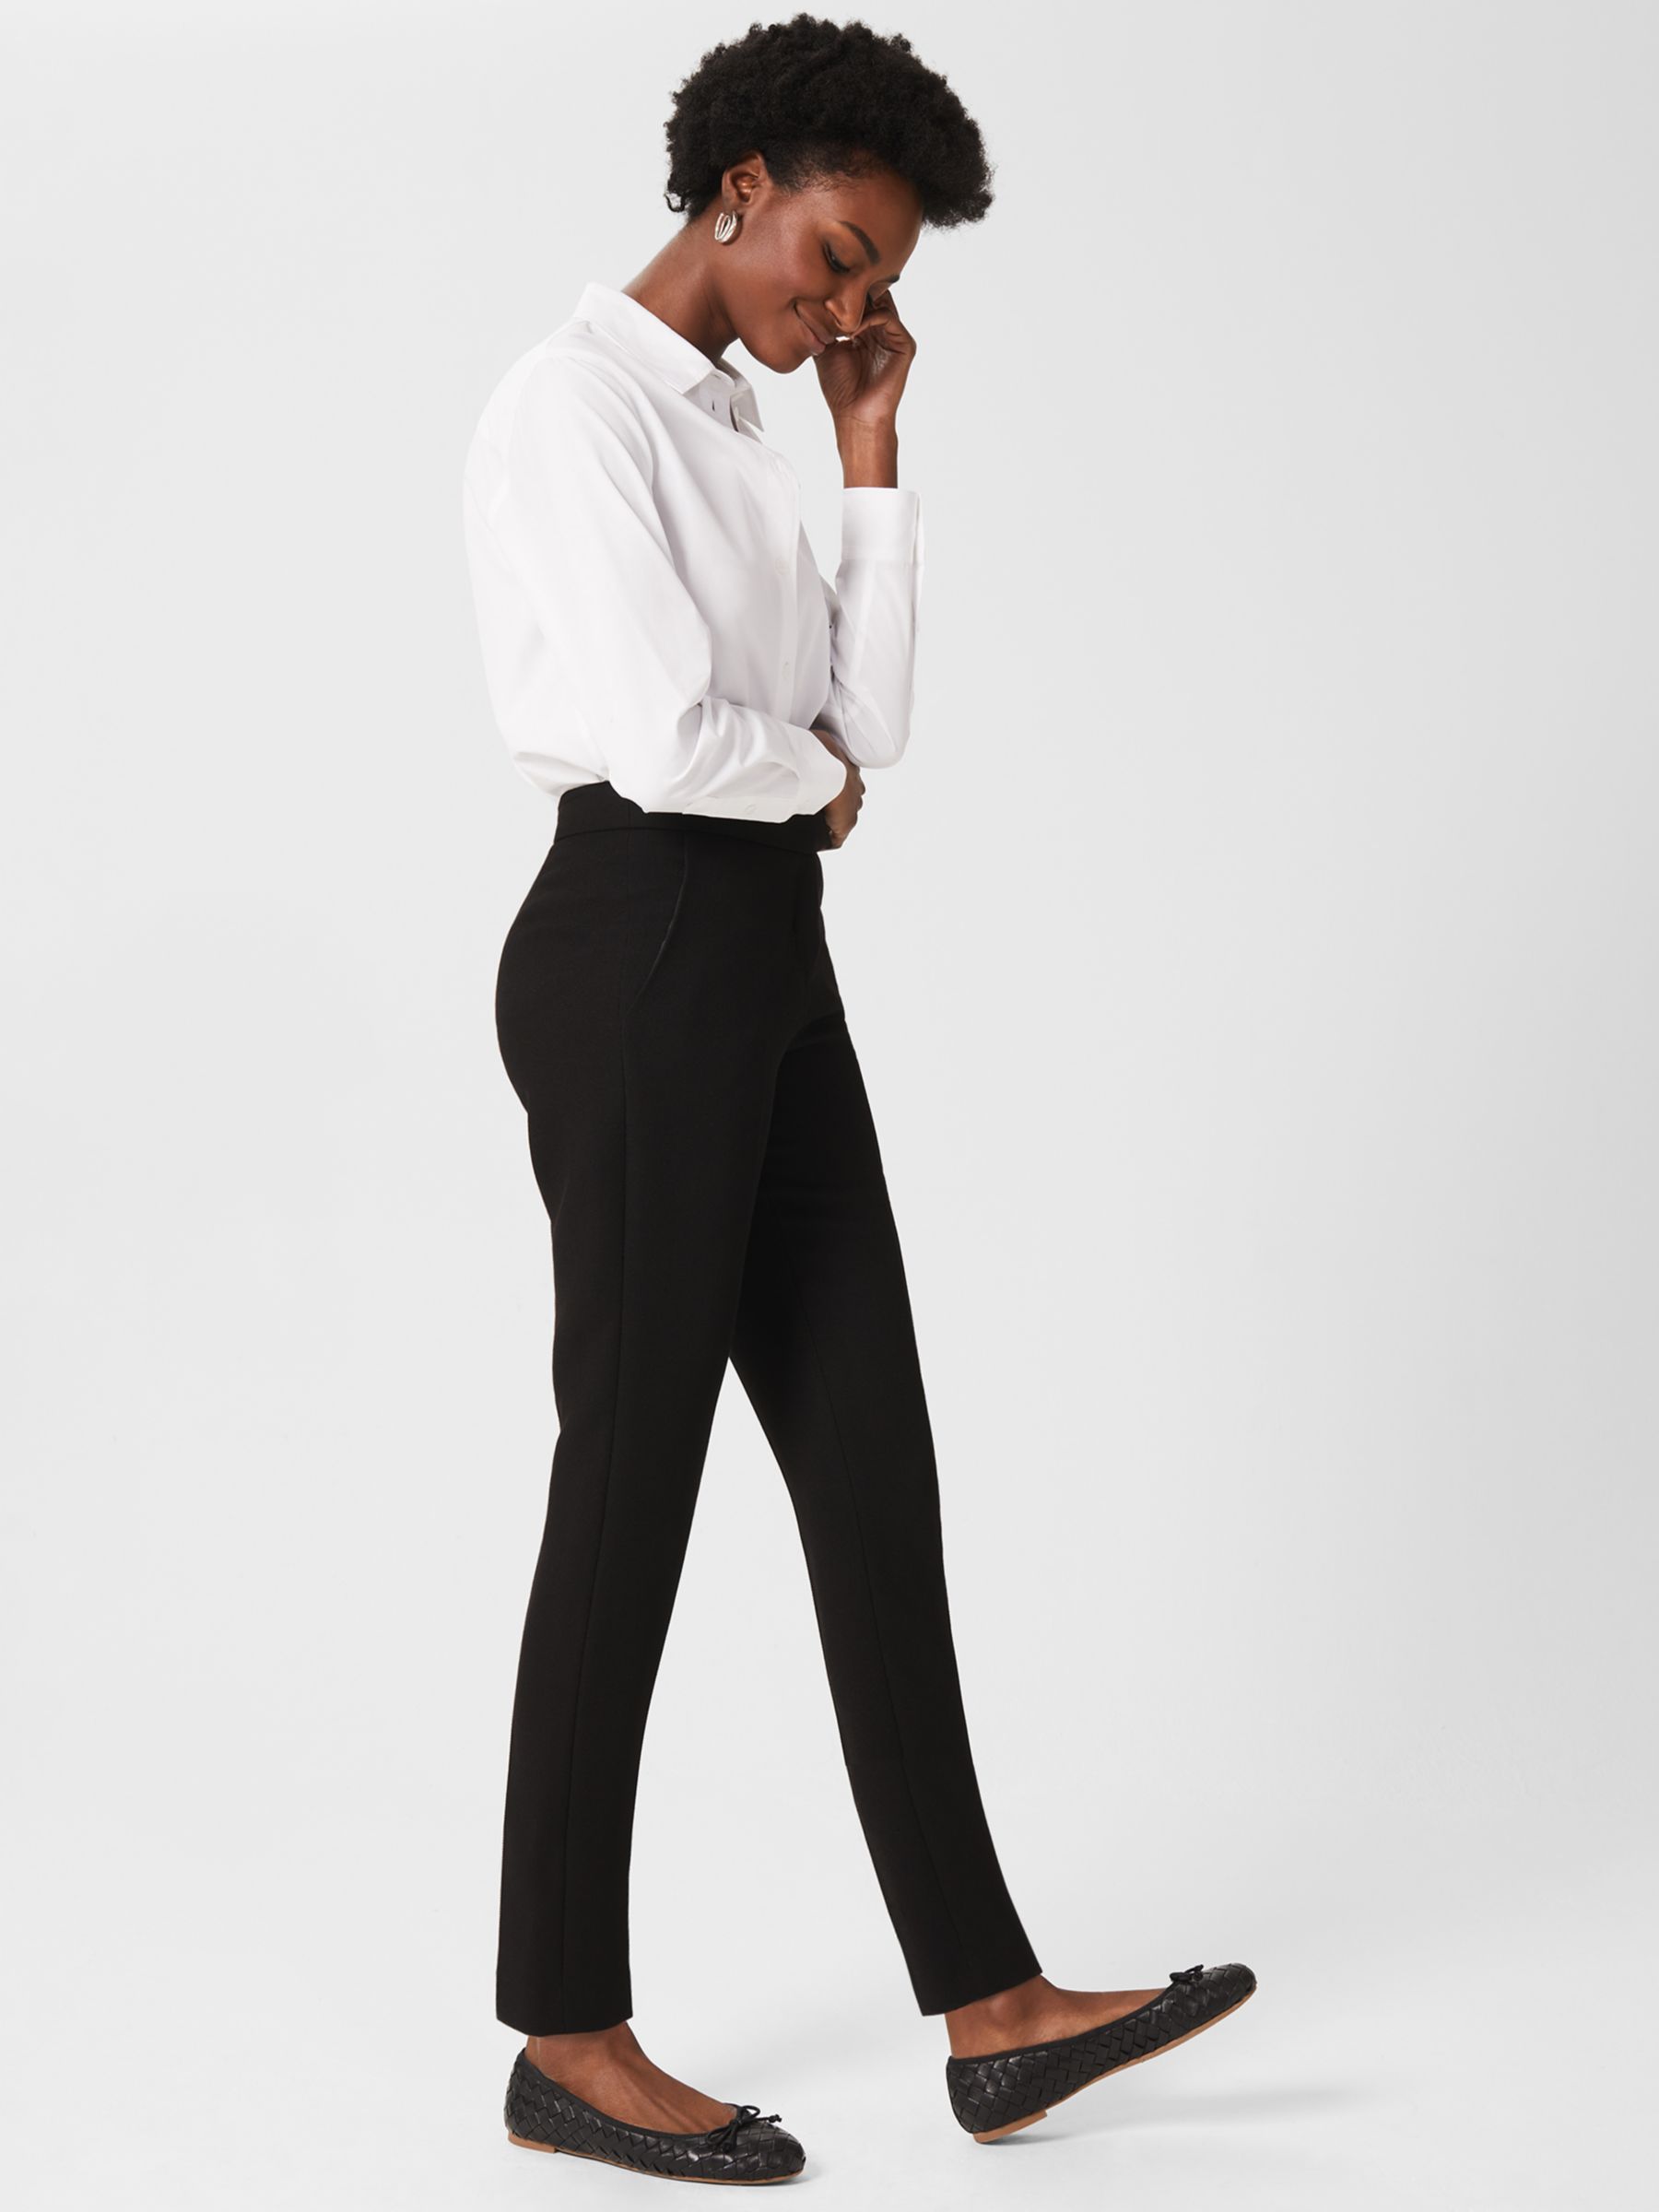 Hobbs Petite Ophelia Slim Trousers, Black at John Lewis & Partners